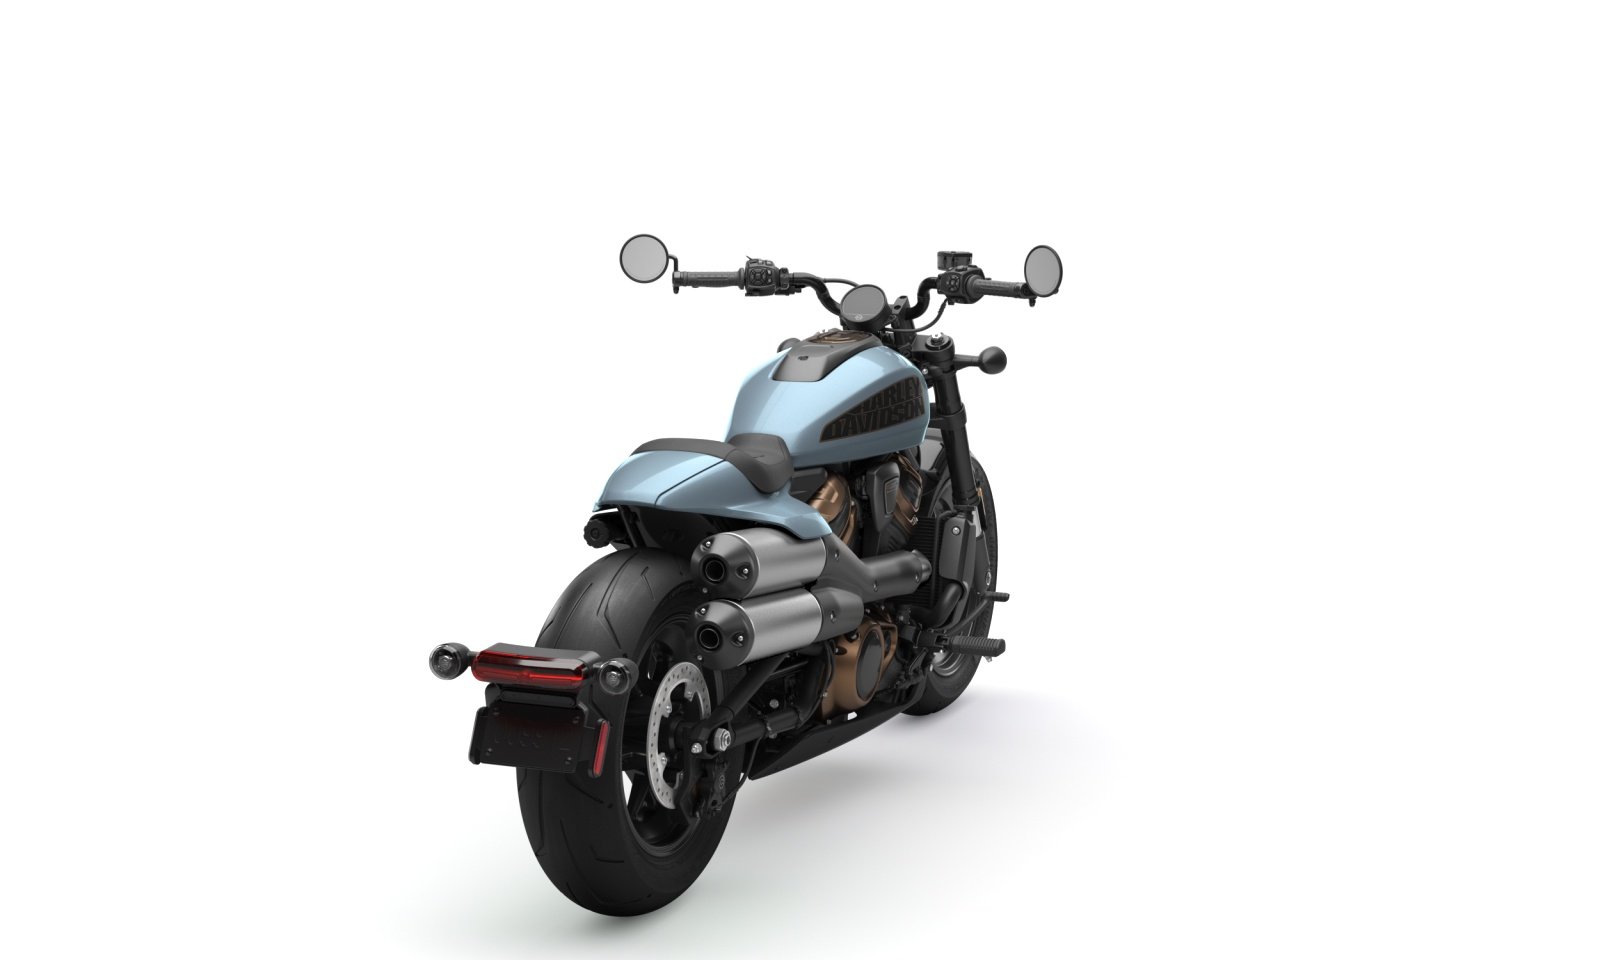 2021 Harley-Davidson Sportster S first look - RevZilla